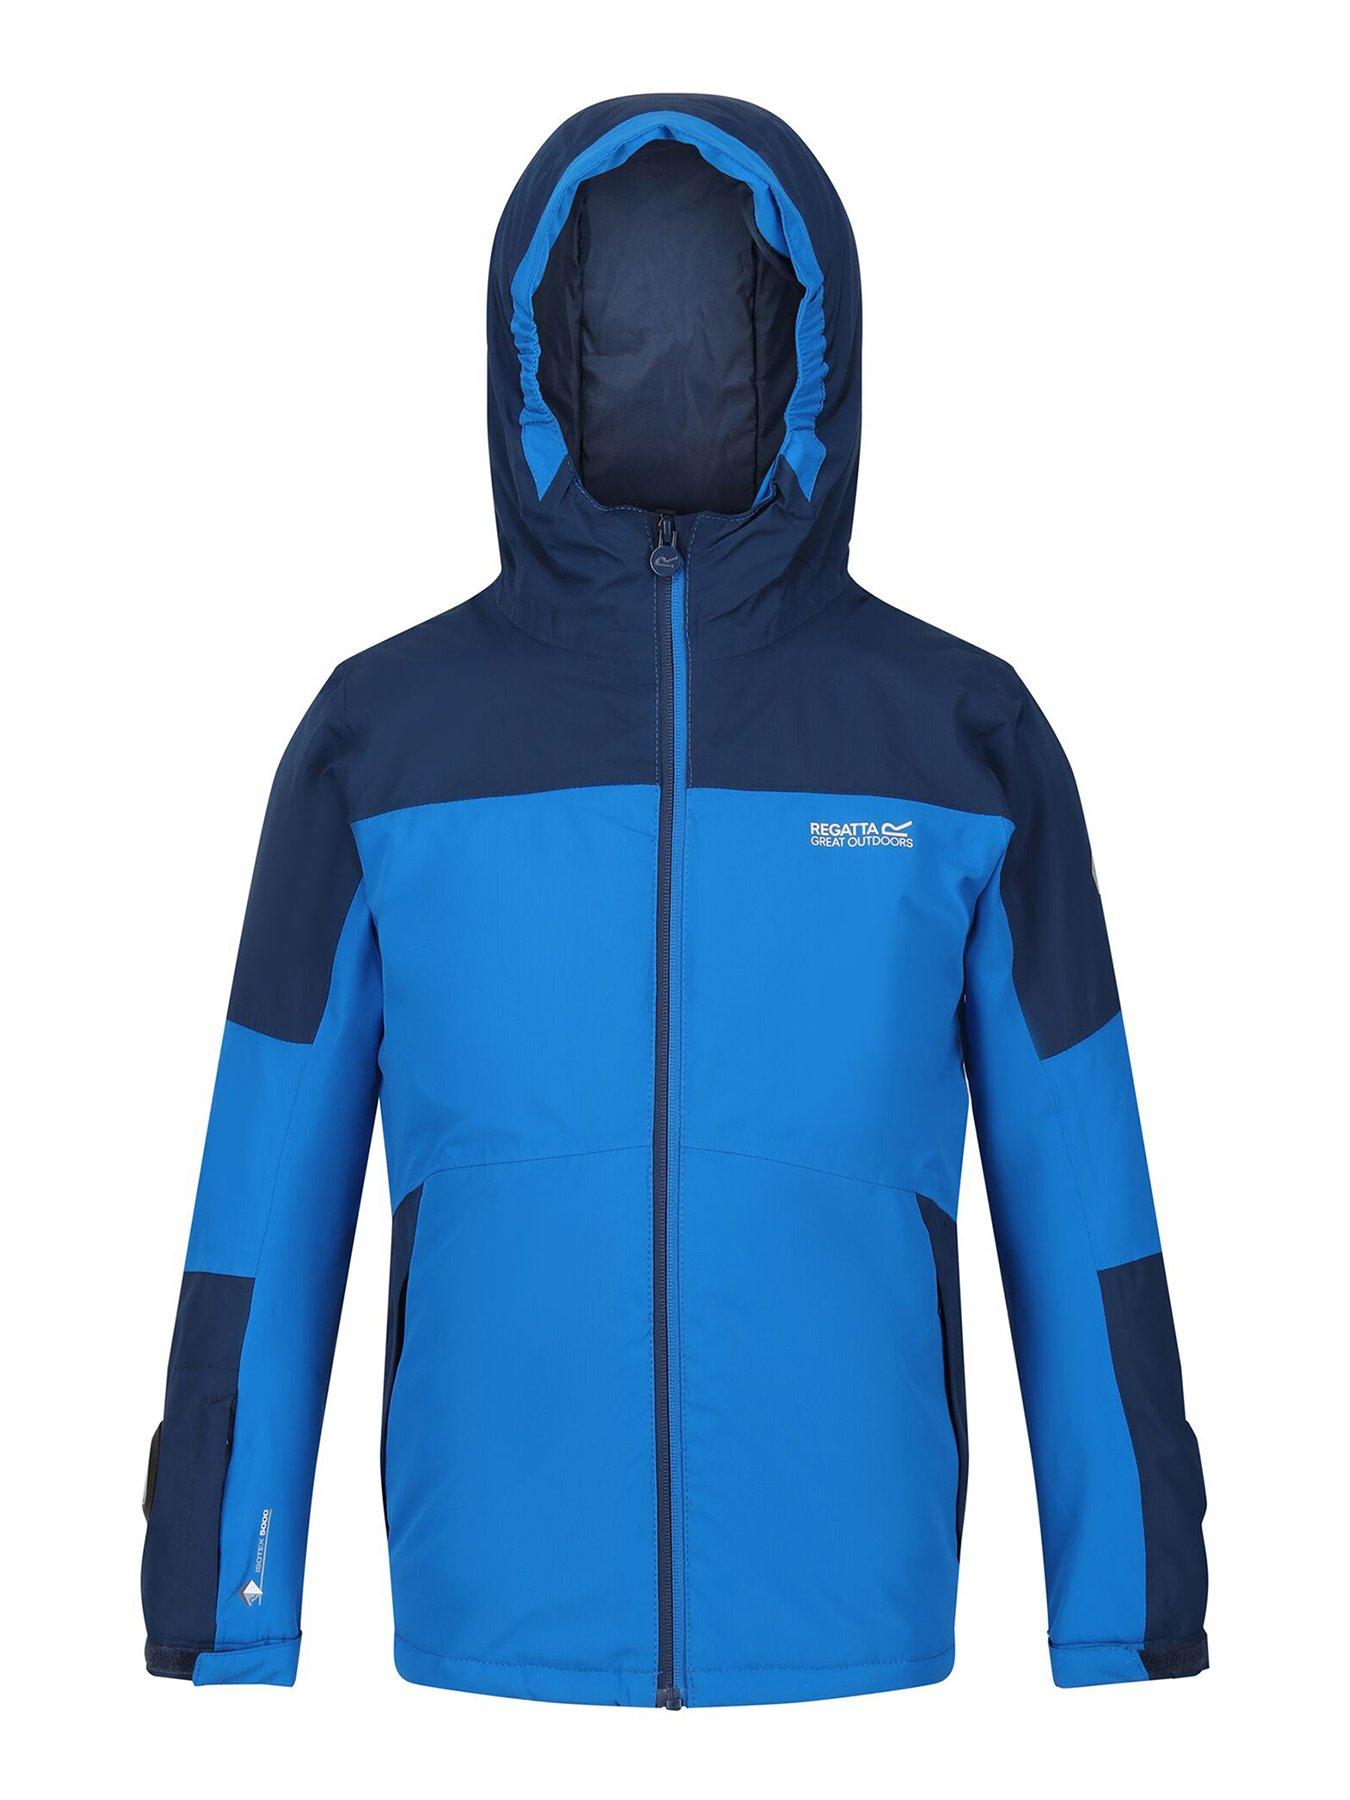 KIDS FASHION Jackets Print Blue discount 81% Primark waterproof jacket 